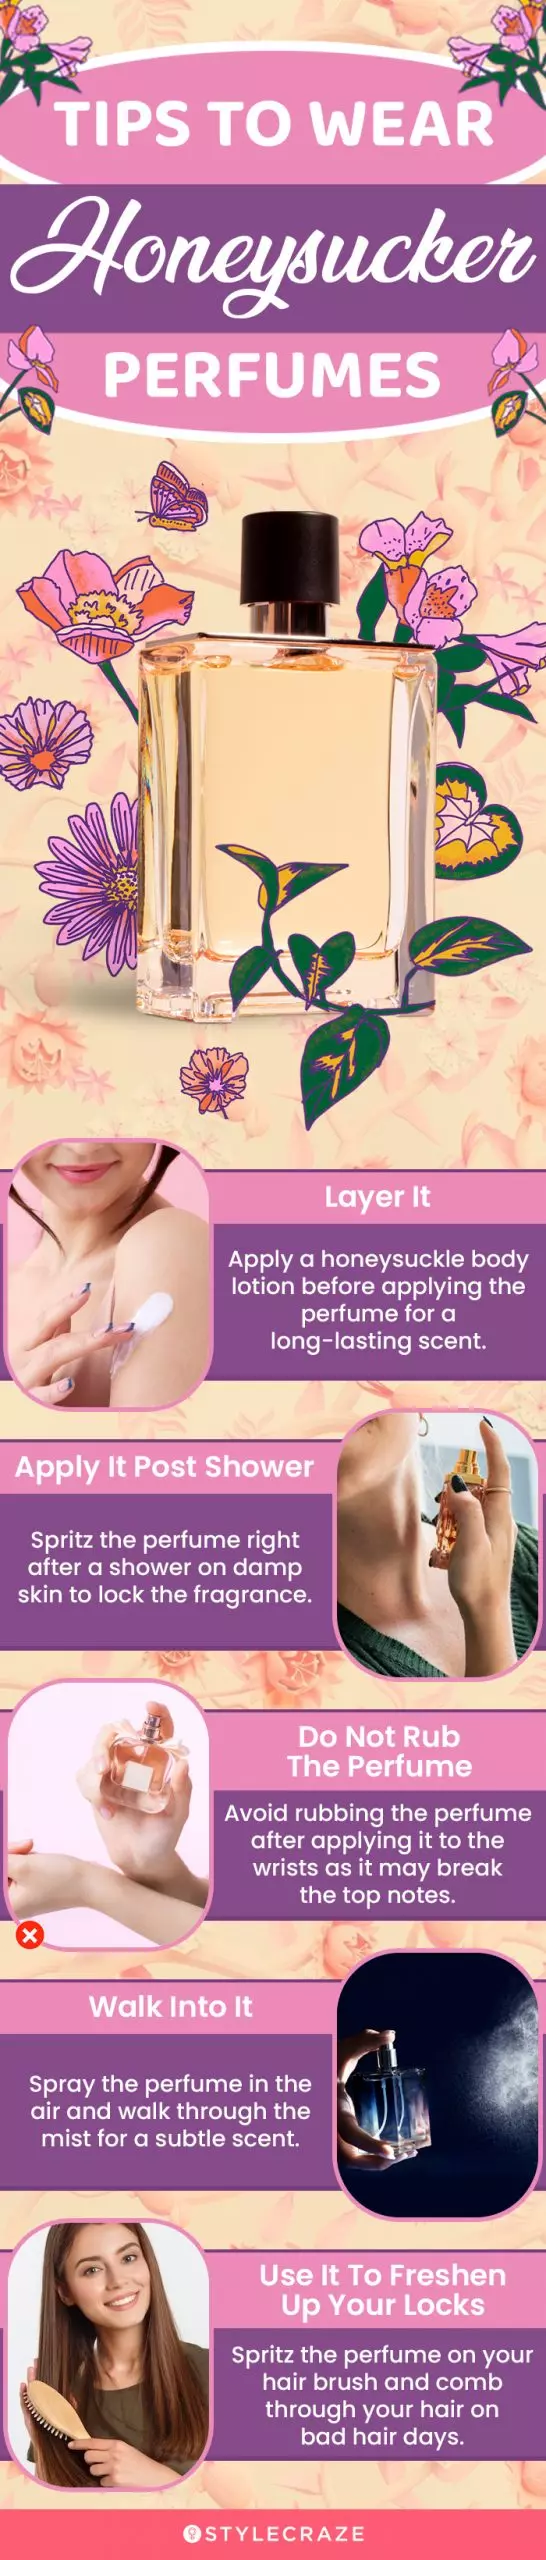 Tips To Wear Honeysucker Perfumes (infographic)